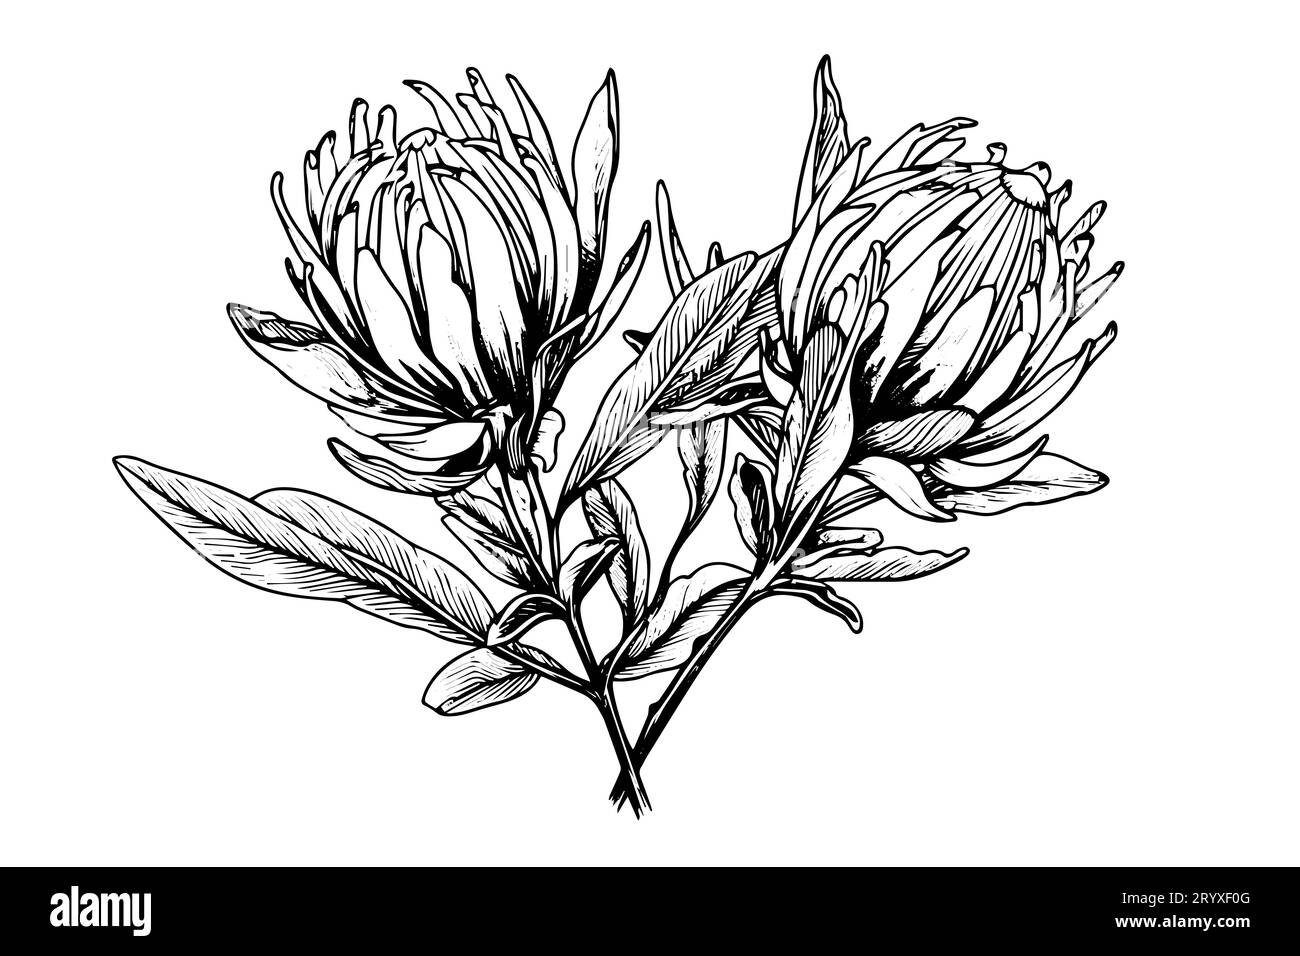 Elegant protea flower hand drawn ink sketch. Engraving style vector illustration. Stock Vector